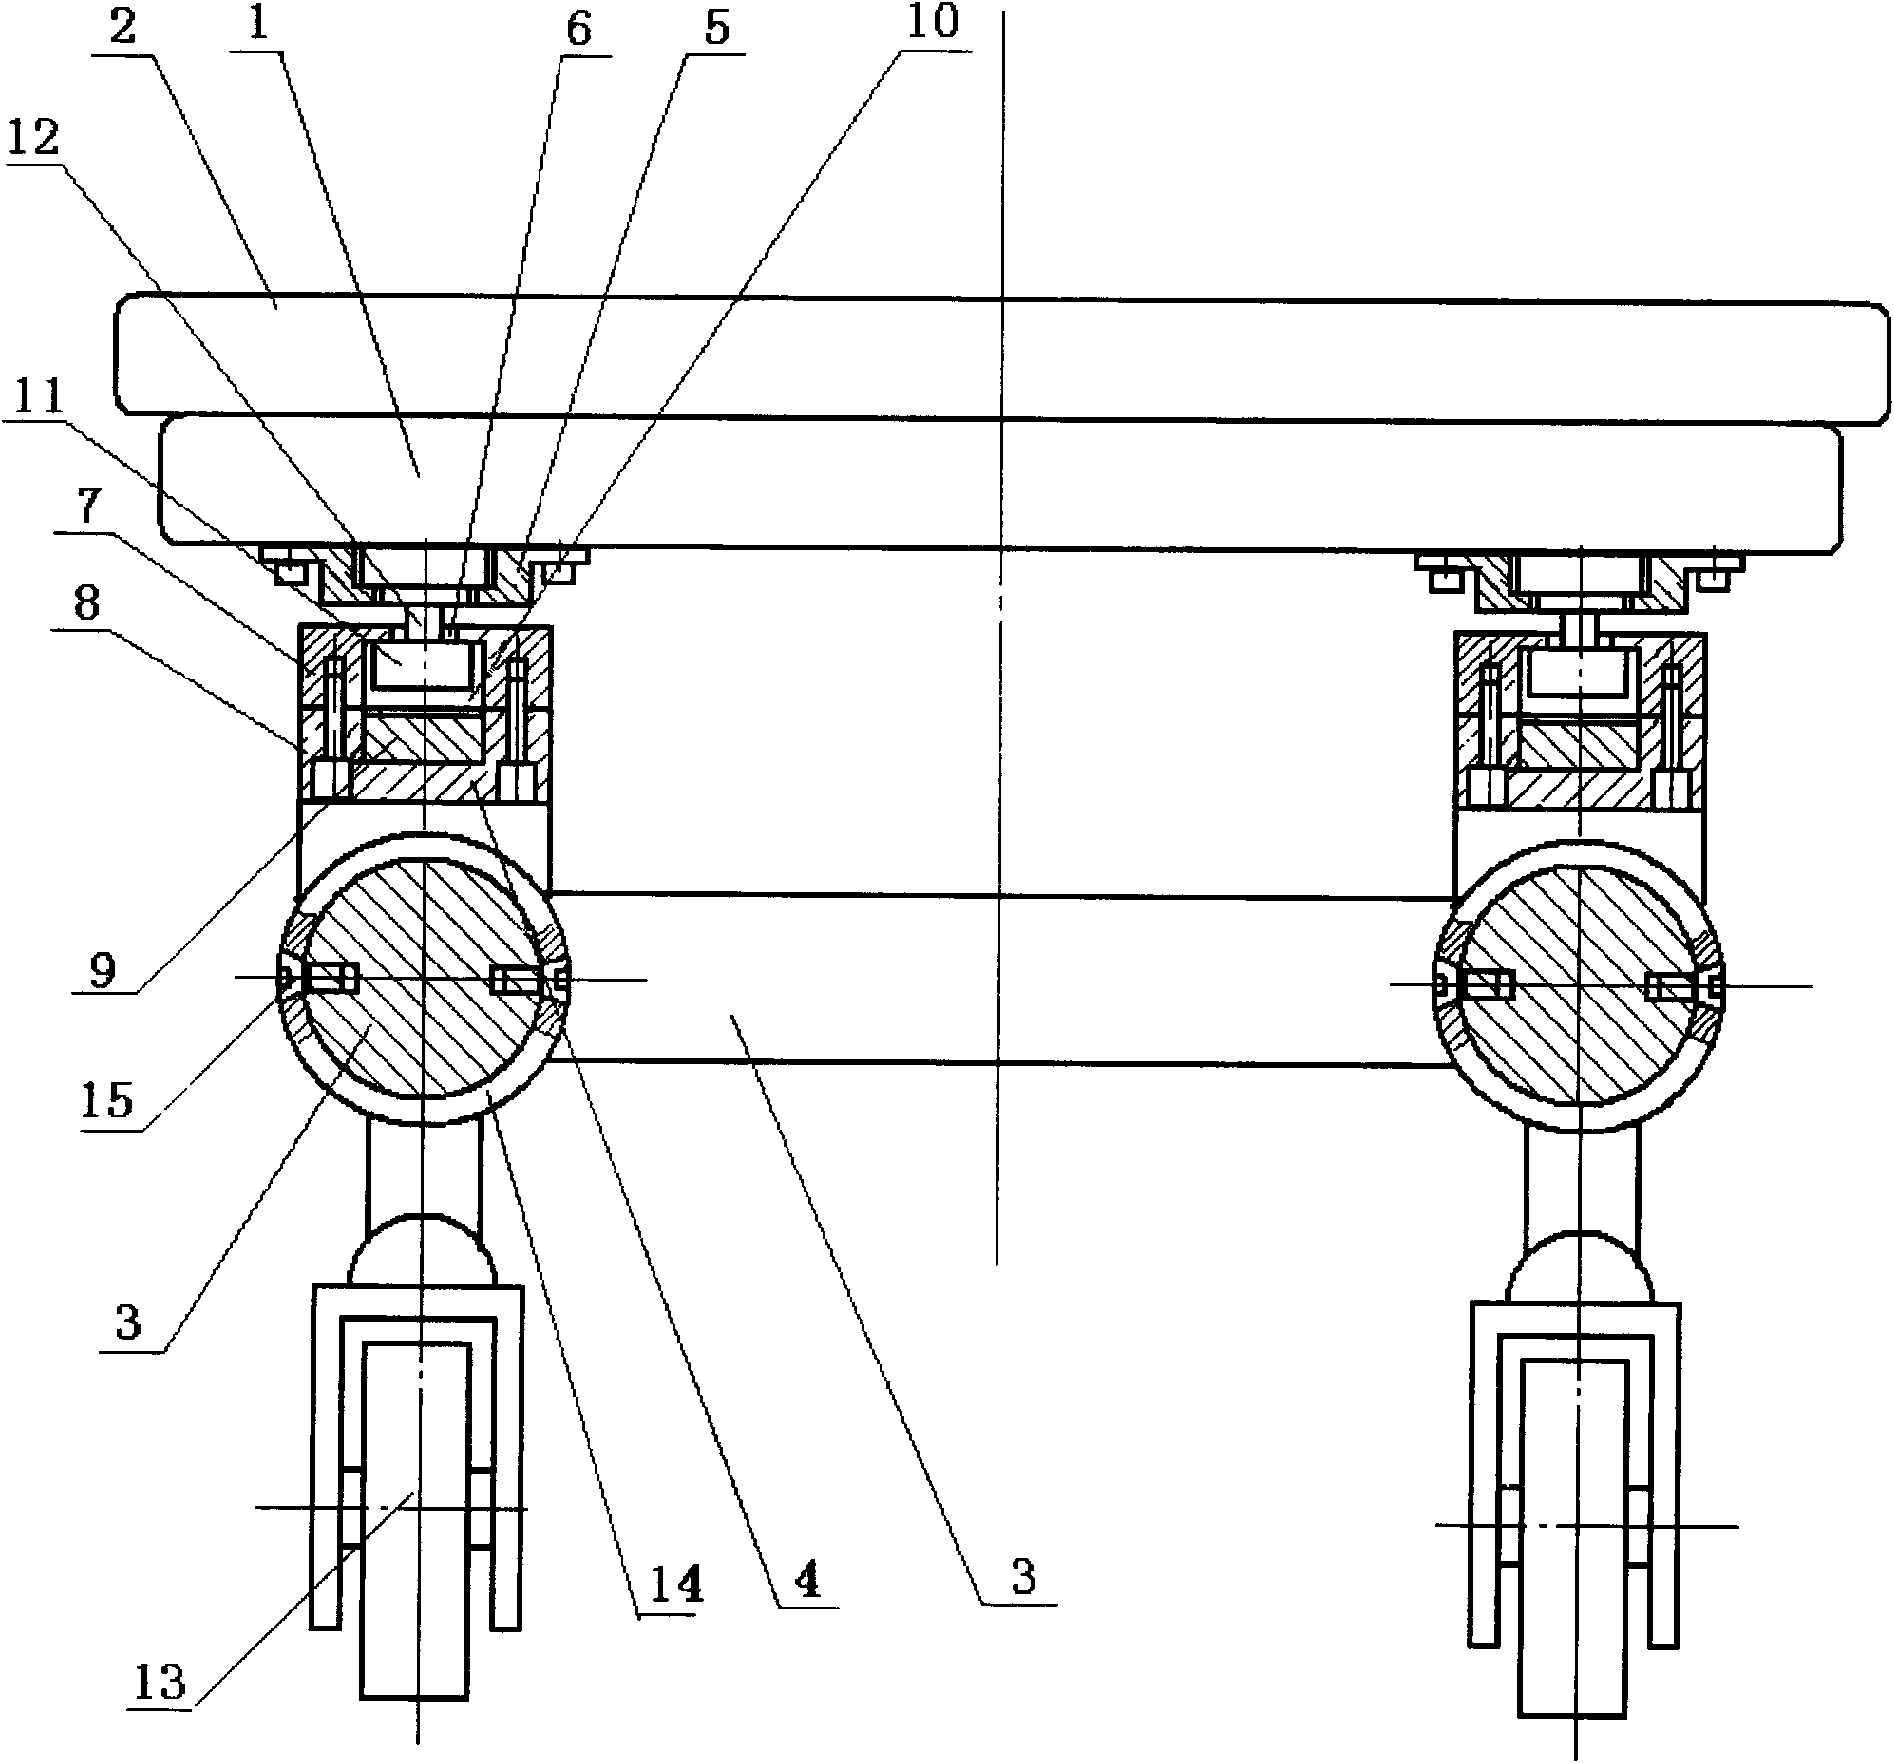 Magnetic suspension stretcher